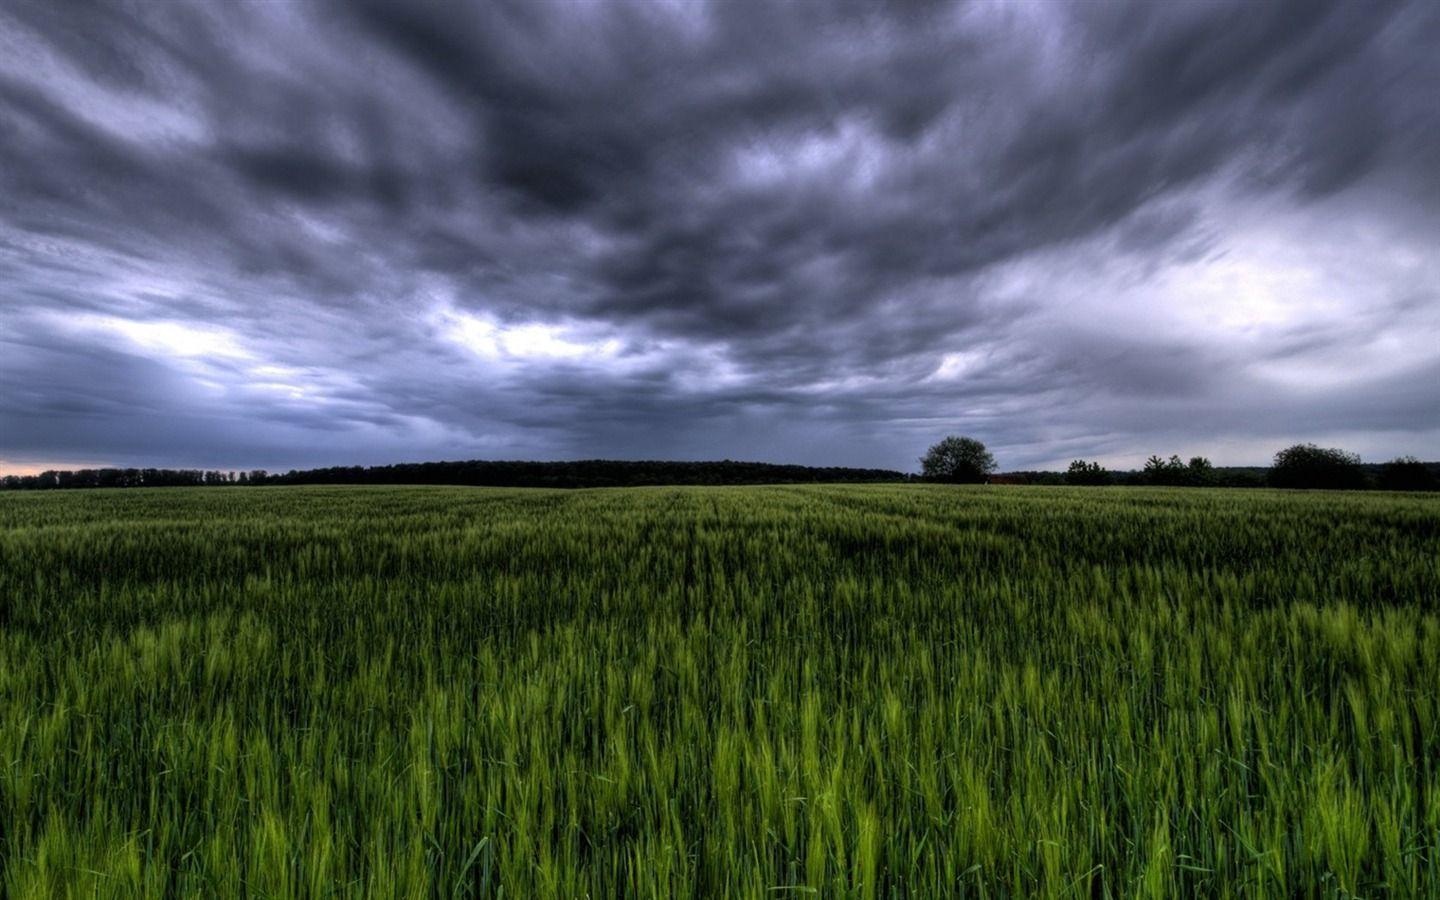 Green field under stormy sky Germany wallpaper download